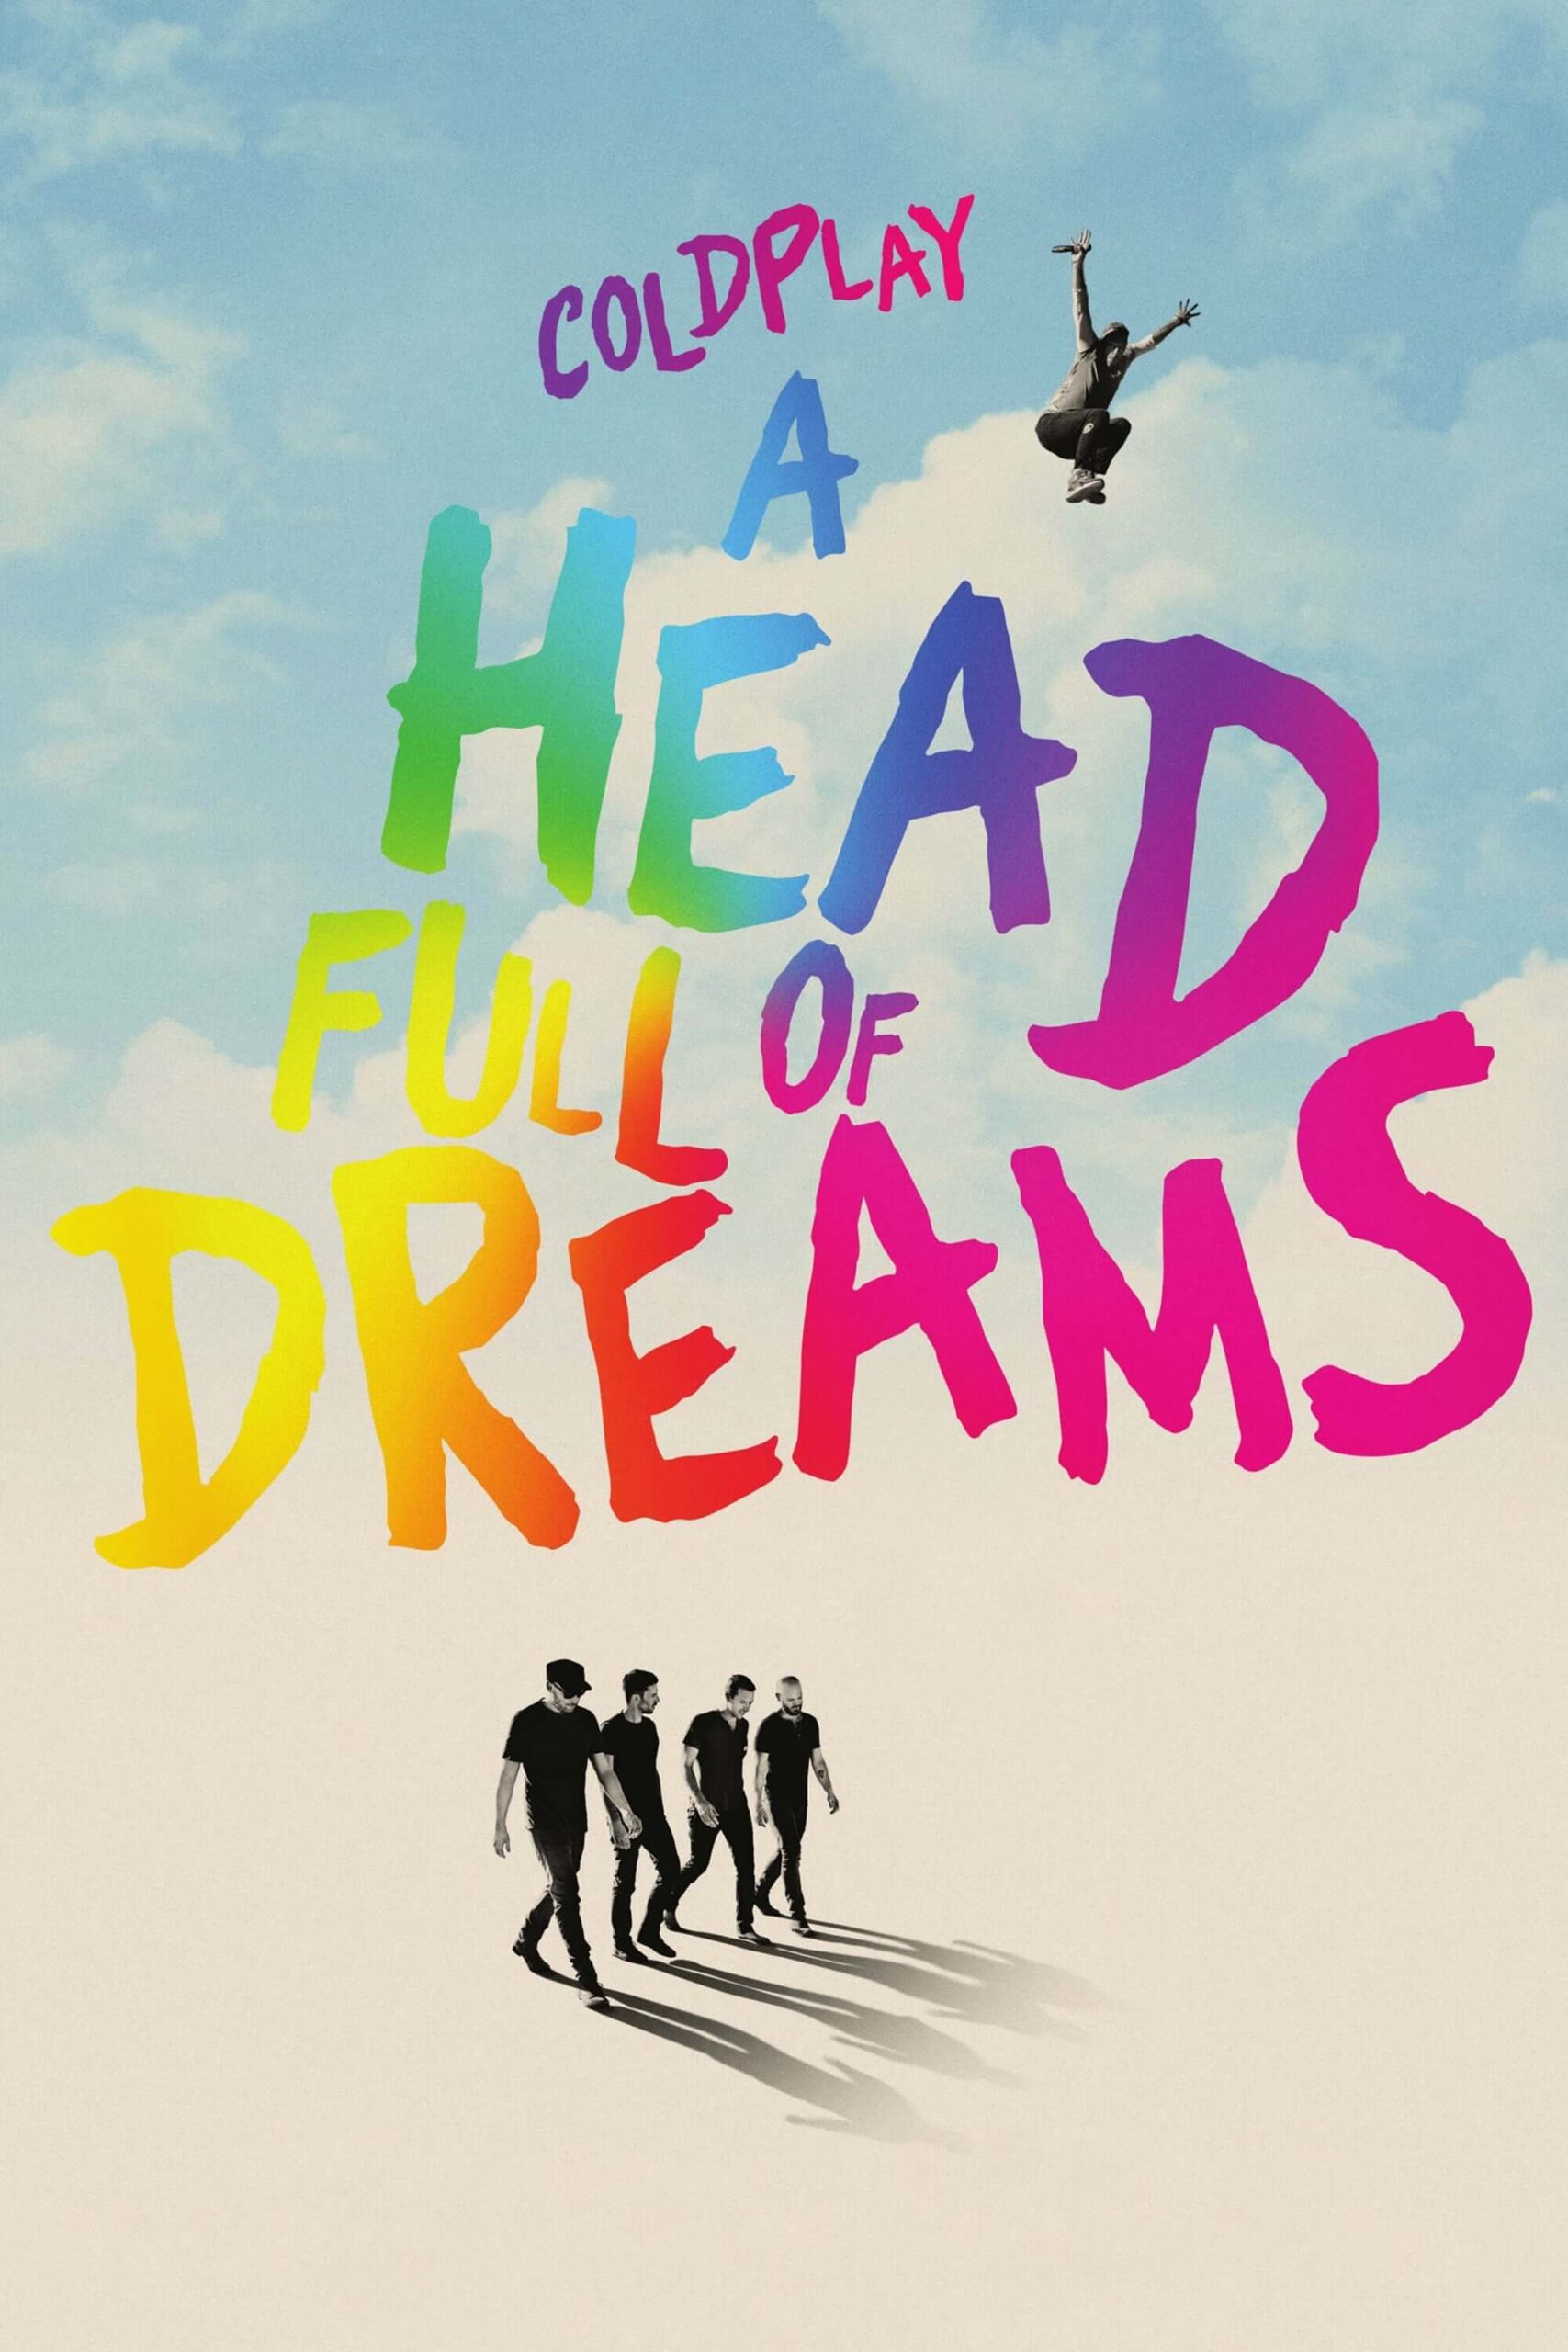 کلدپلی یک سر پر از رویا (Coldplay: A Head Full of Dreams)